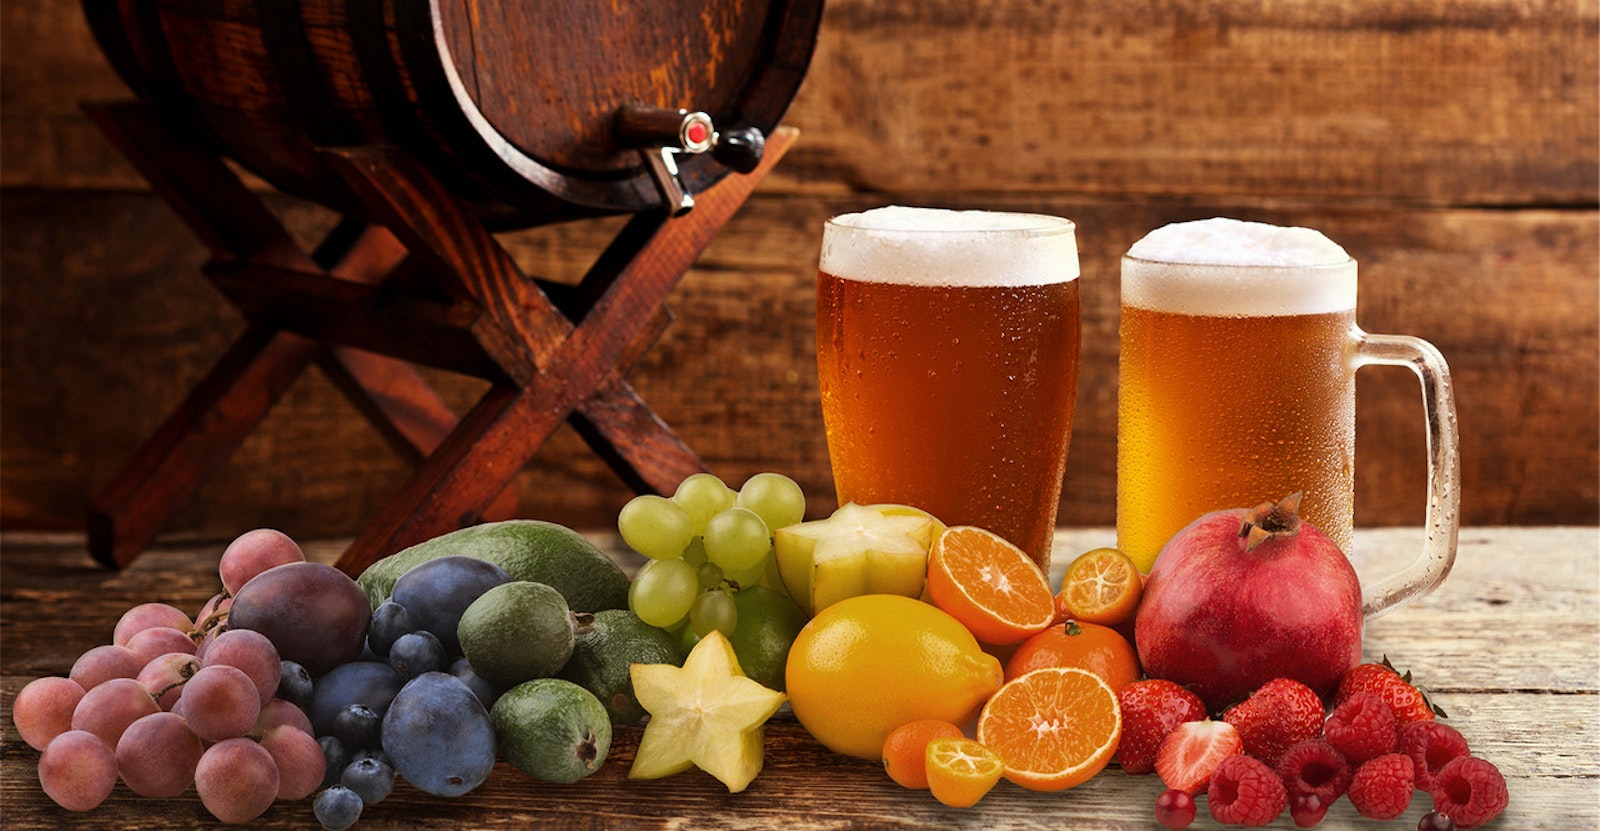 Fruit Beer Market Demand, Price, Size, Industry Share, Top Companies, & Report 2023-2028